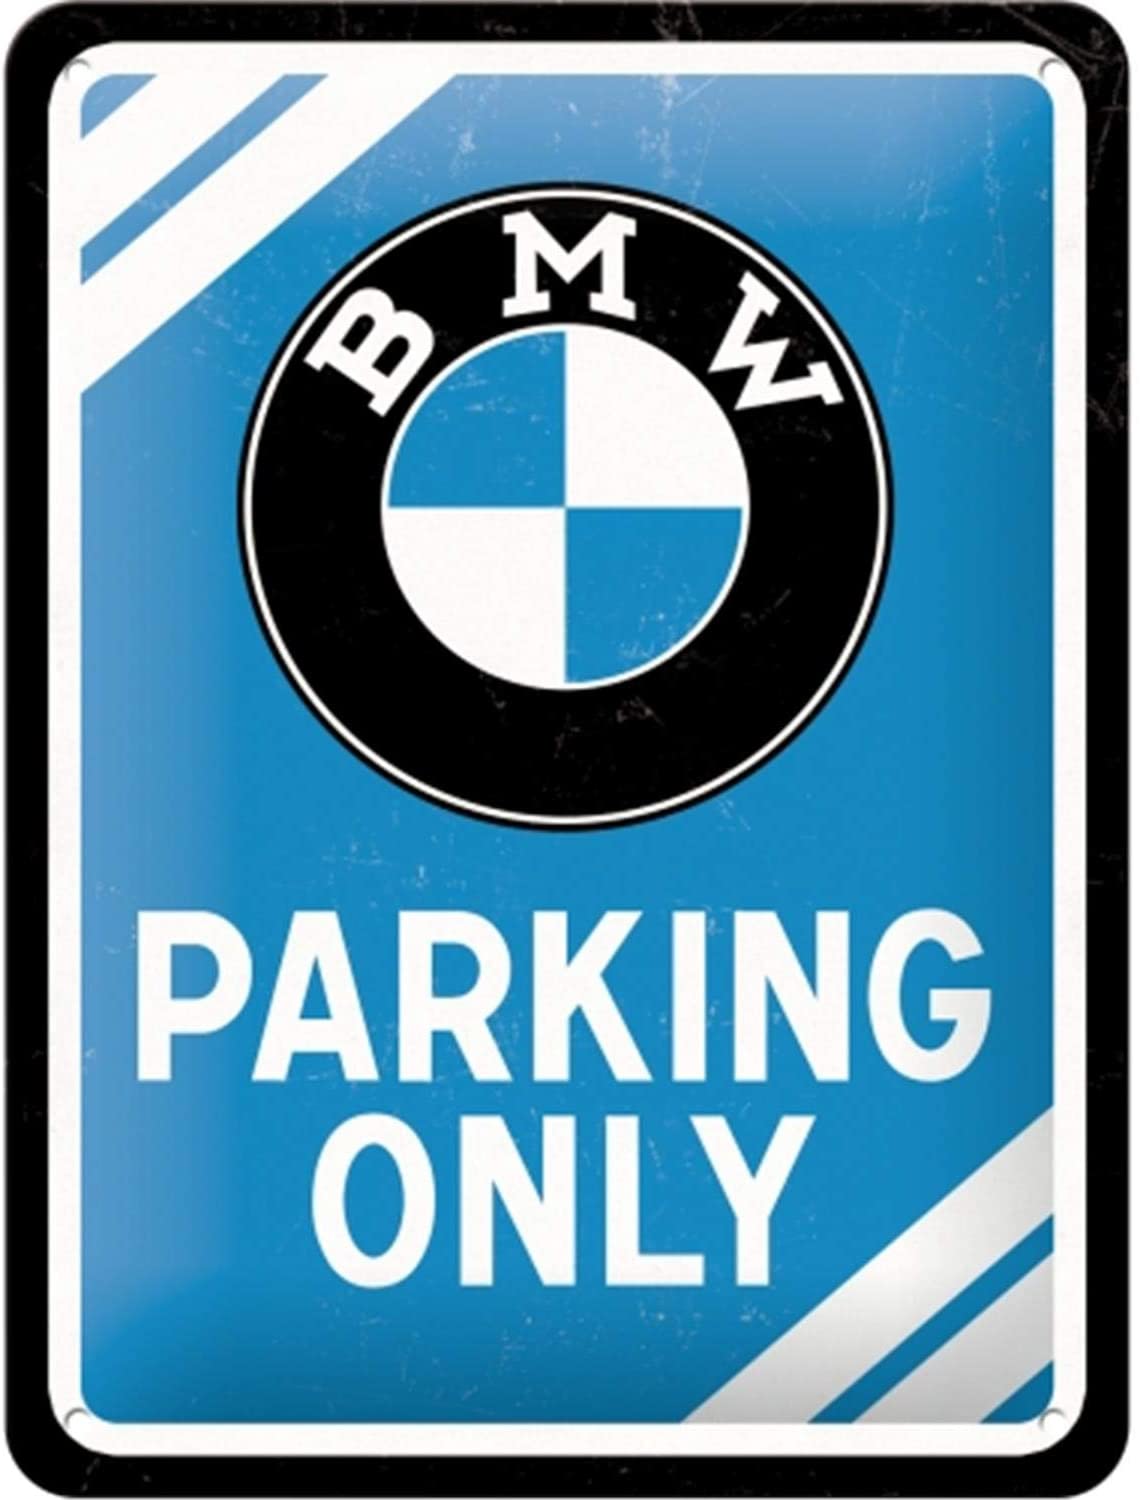 gewölbt & Motiv geprägt BMW 15 x 20 cm Parking only blue Blechschild 